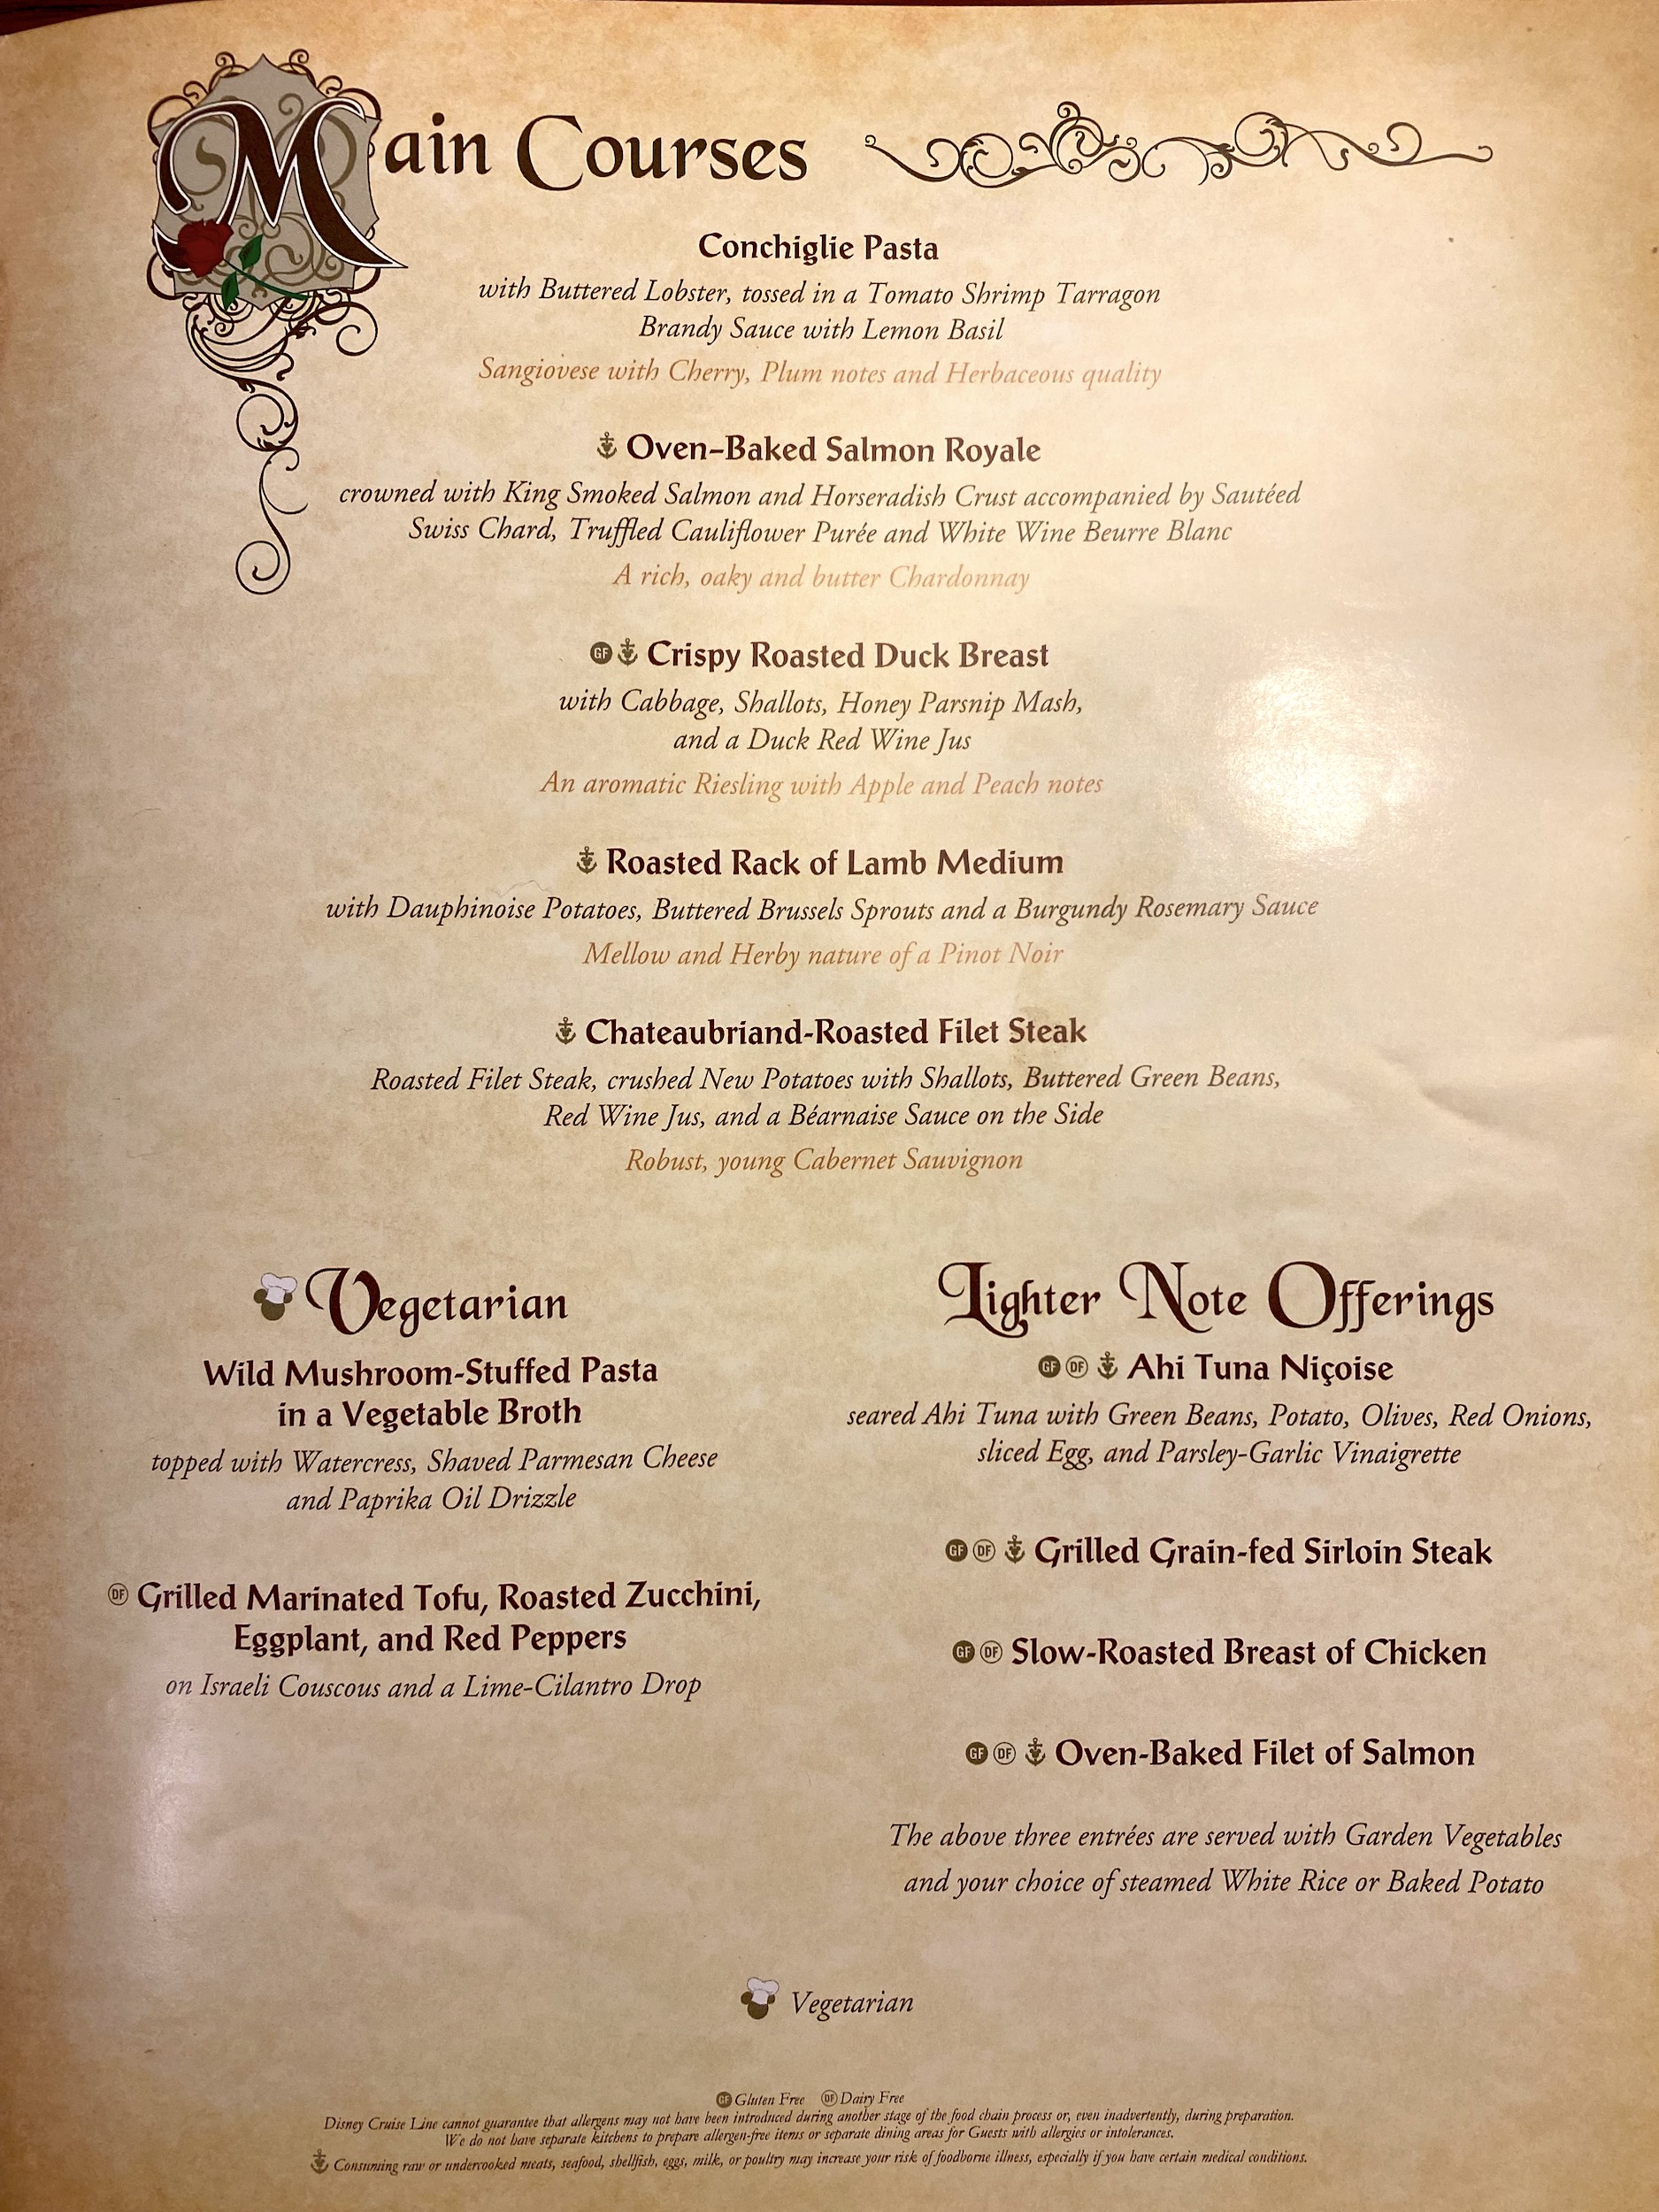 Disney Dream Royal Palace menu • Disney Cruise Mom Blog